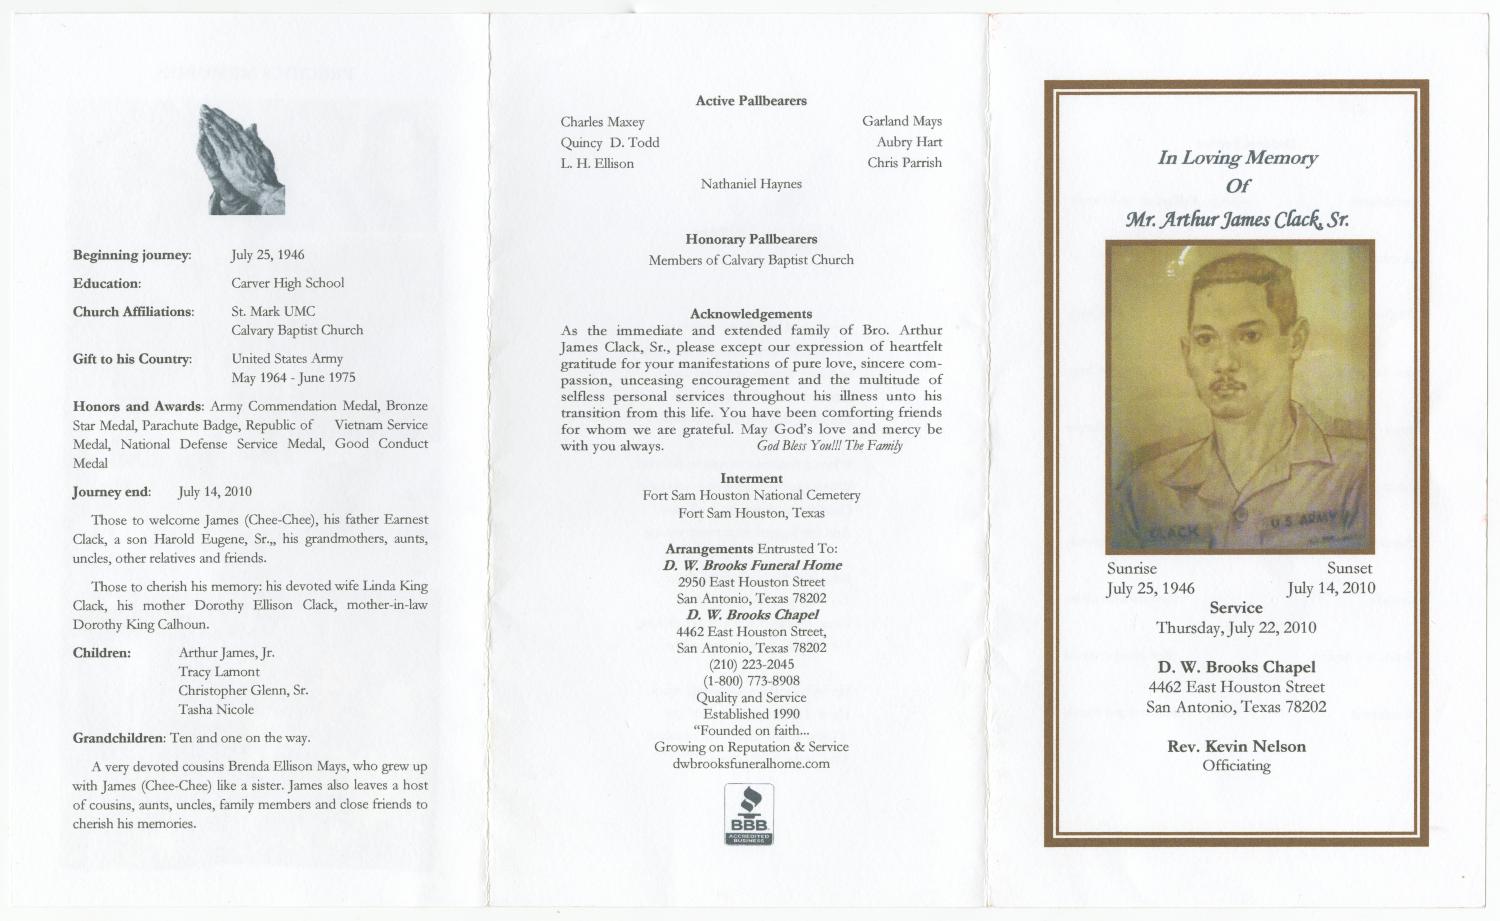 [Funeral Program for Arthur Clack, Sr., July 22, 2010]
                                                
                                                    [Sequence #]: 3 of 3
                                                